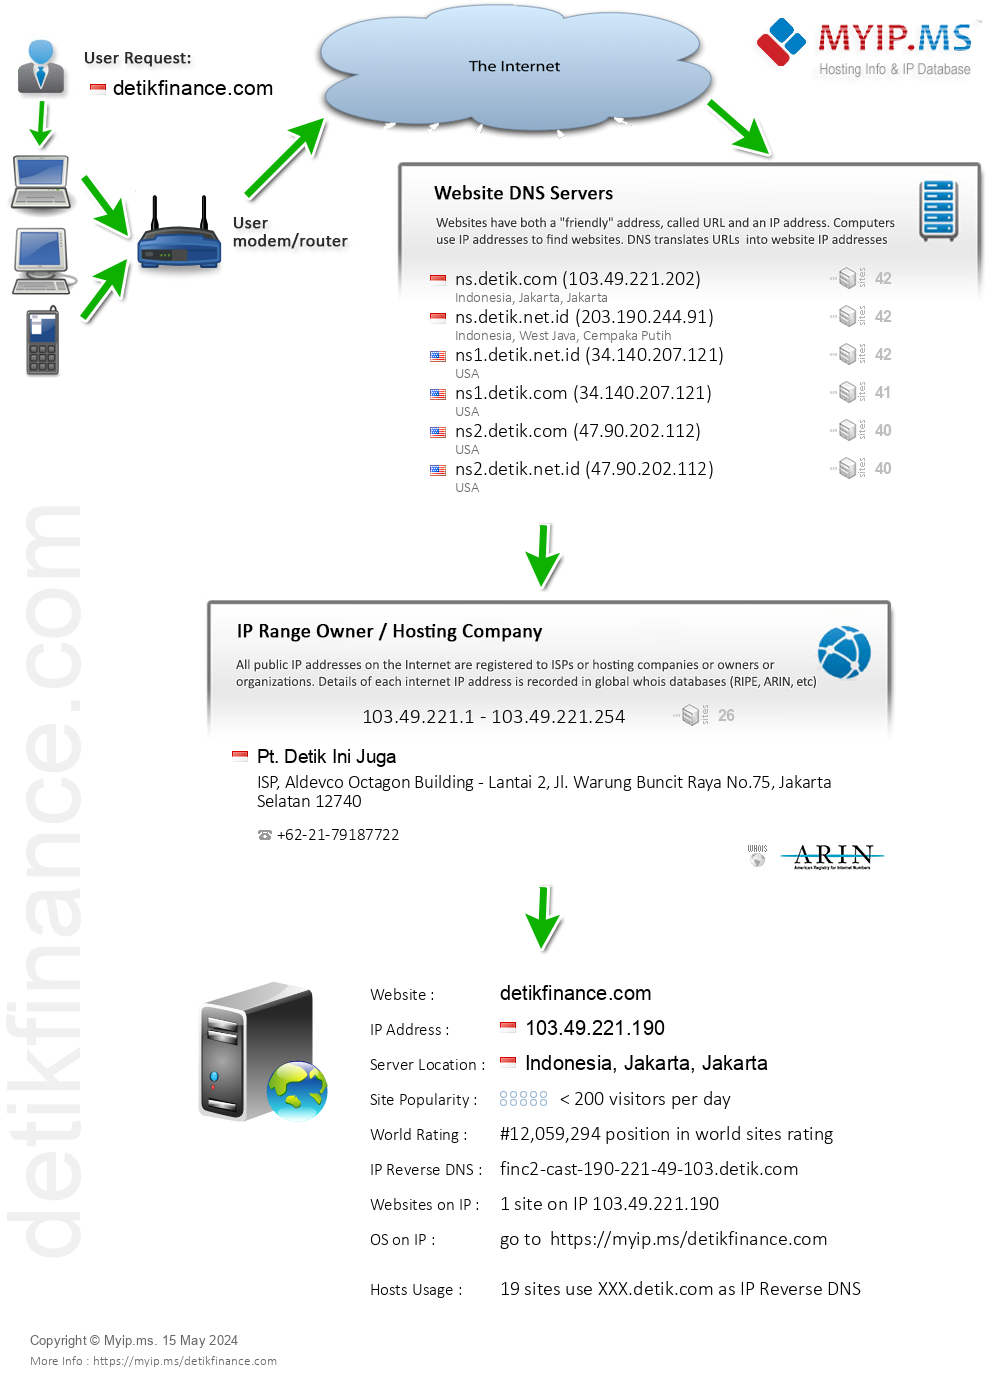 Detikfinance.com - Website Hosting Visual IP Diagram